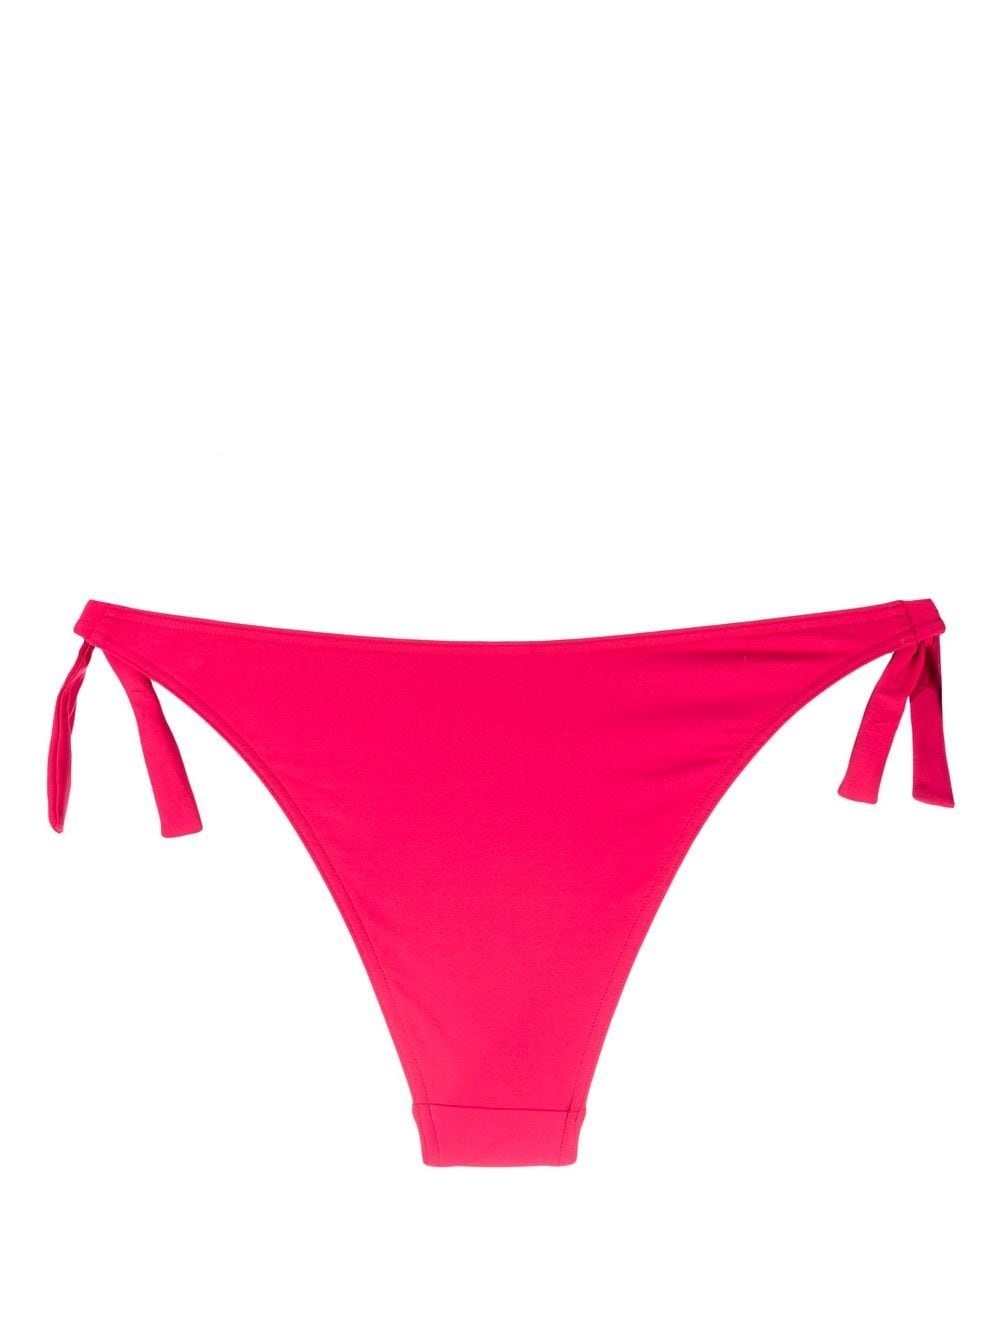 Panache thin bikini bottoms - 2